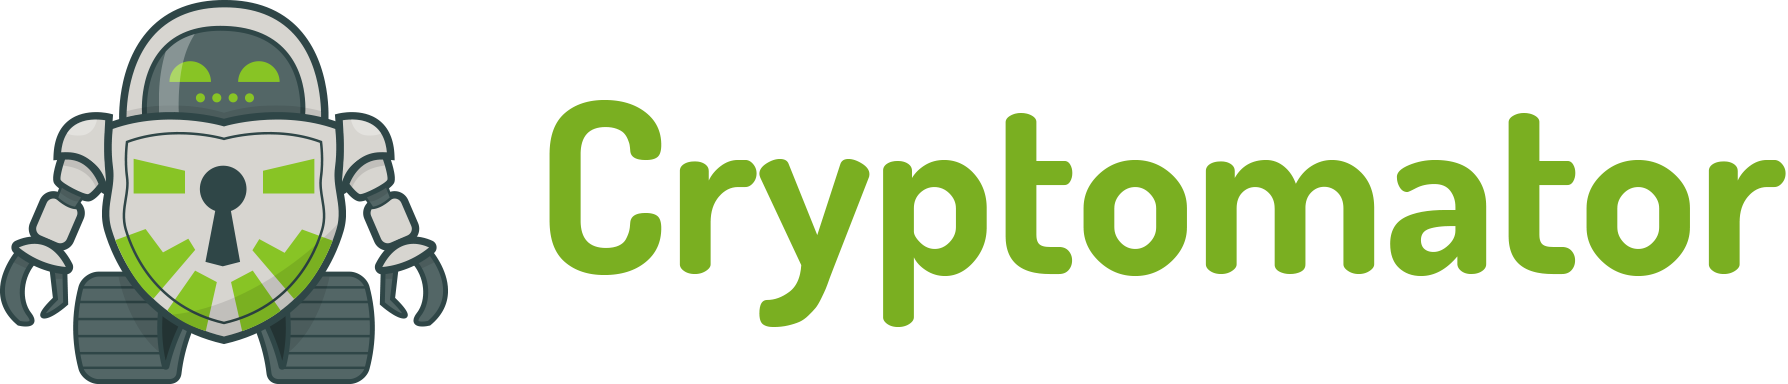 Cryptomator logo with text